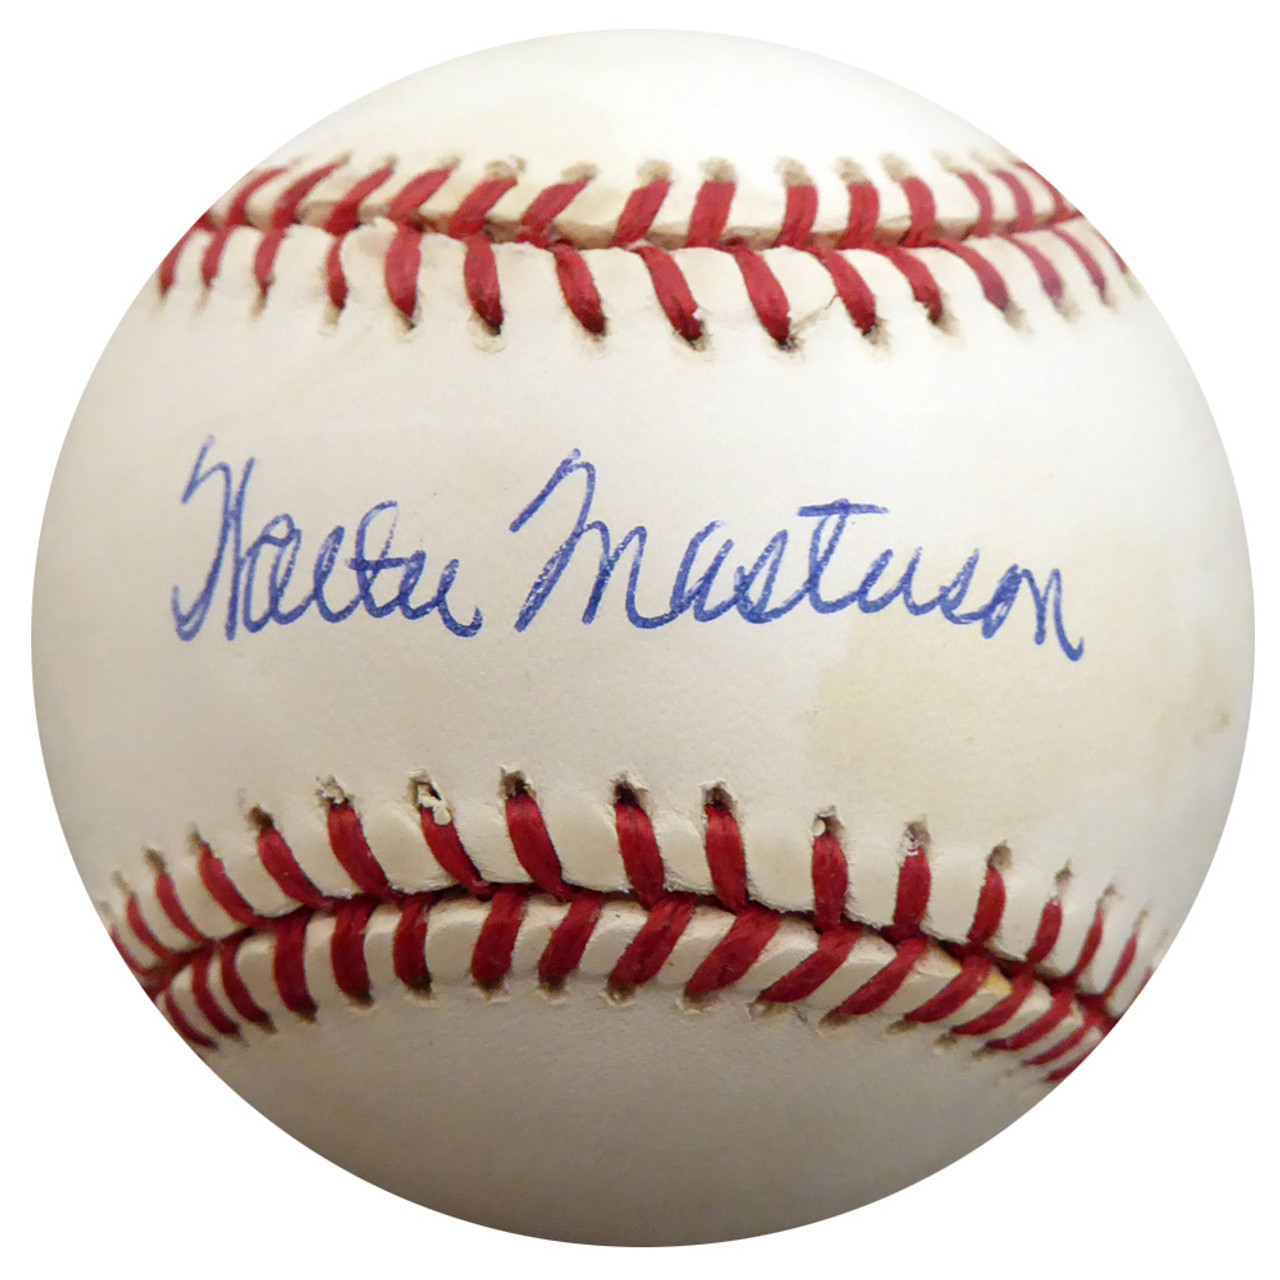 Boston Red Sox Baseball, Red Sox Autographed Baseballs, Game Used Baseballs